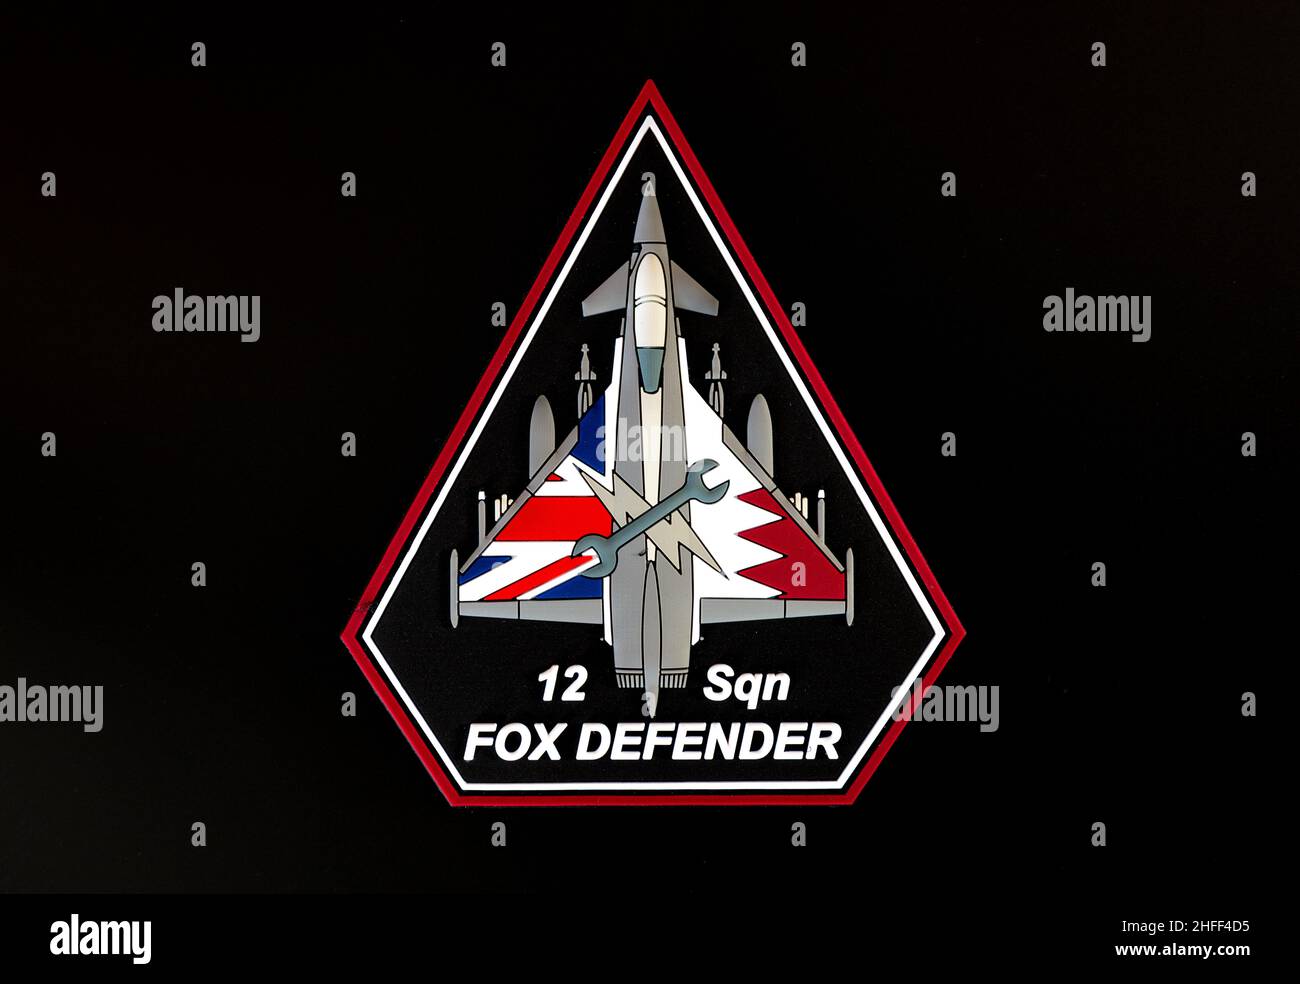 12 Squadron Exercise Fox Defender Patch Stock Photo